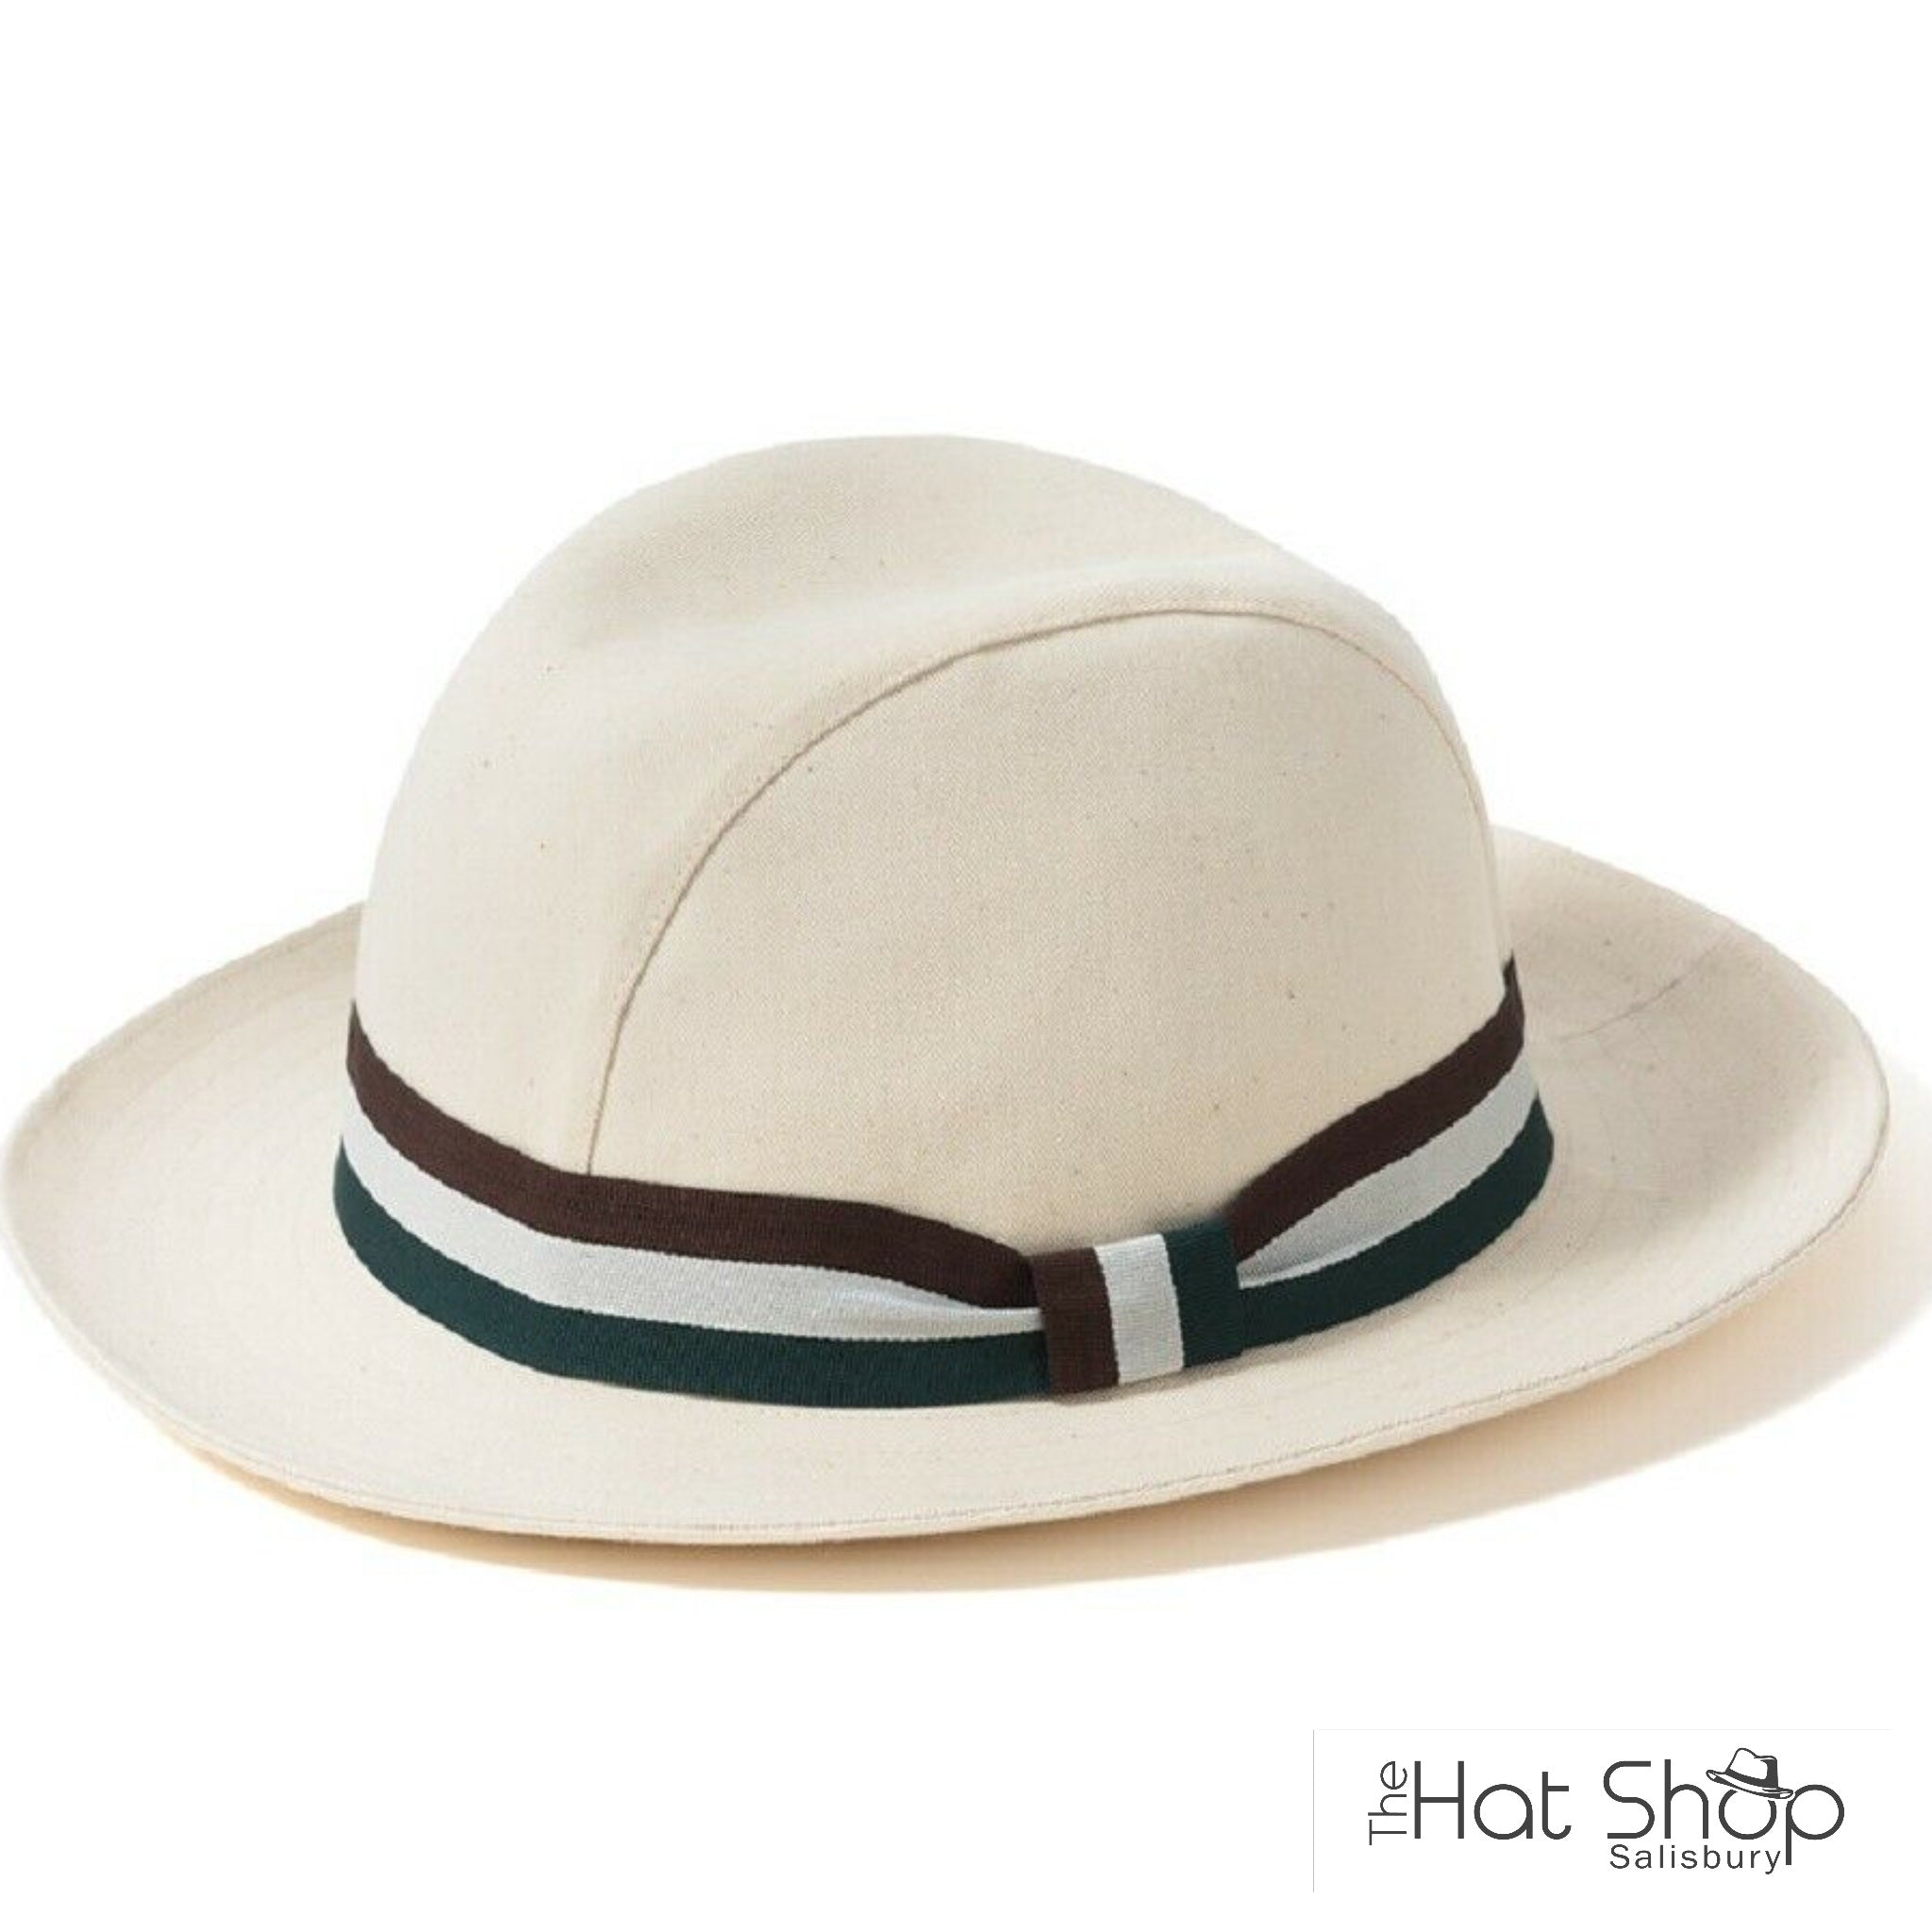 The Hat Shop Failsworth Henley Summer Hat